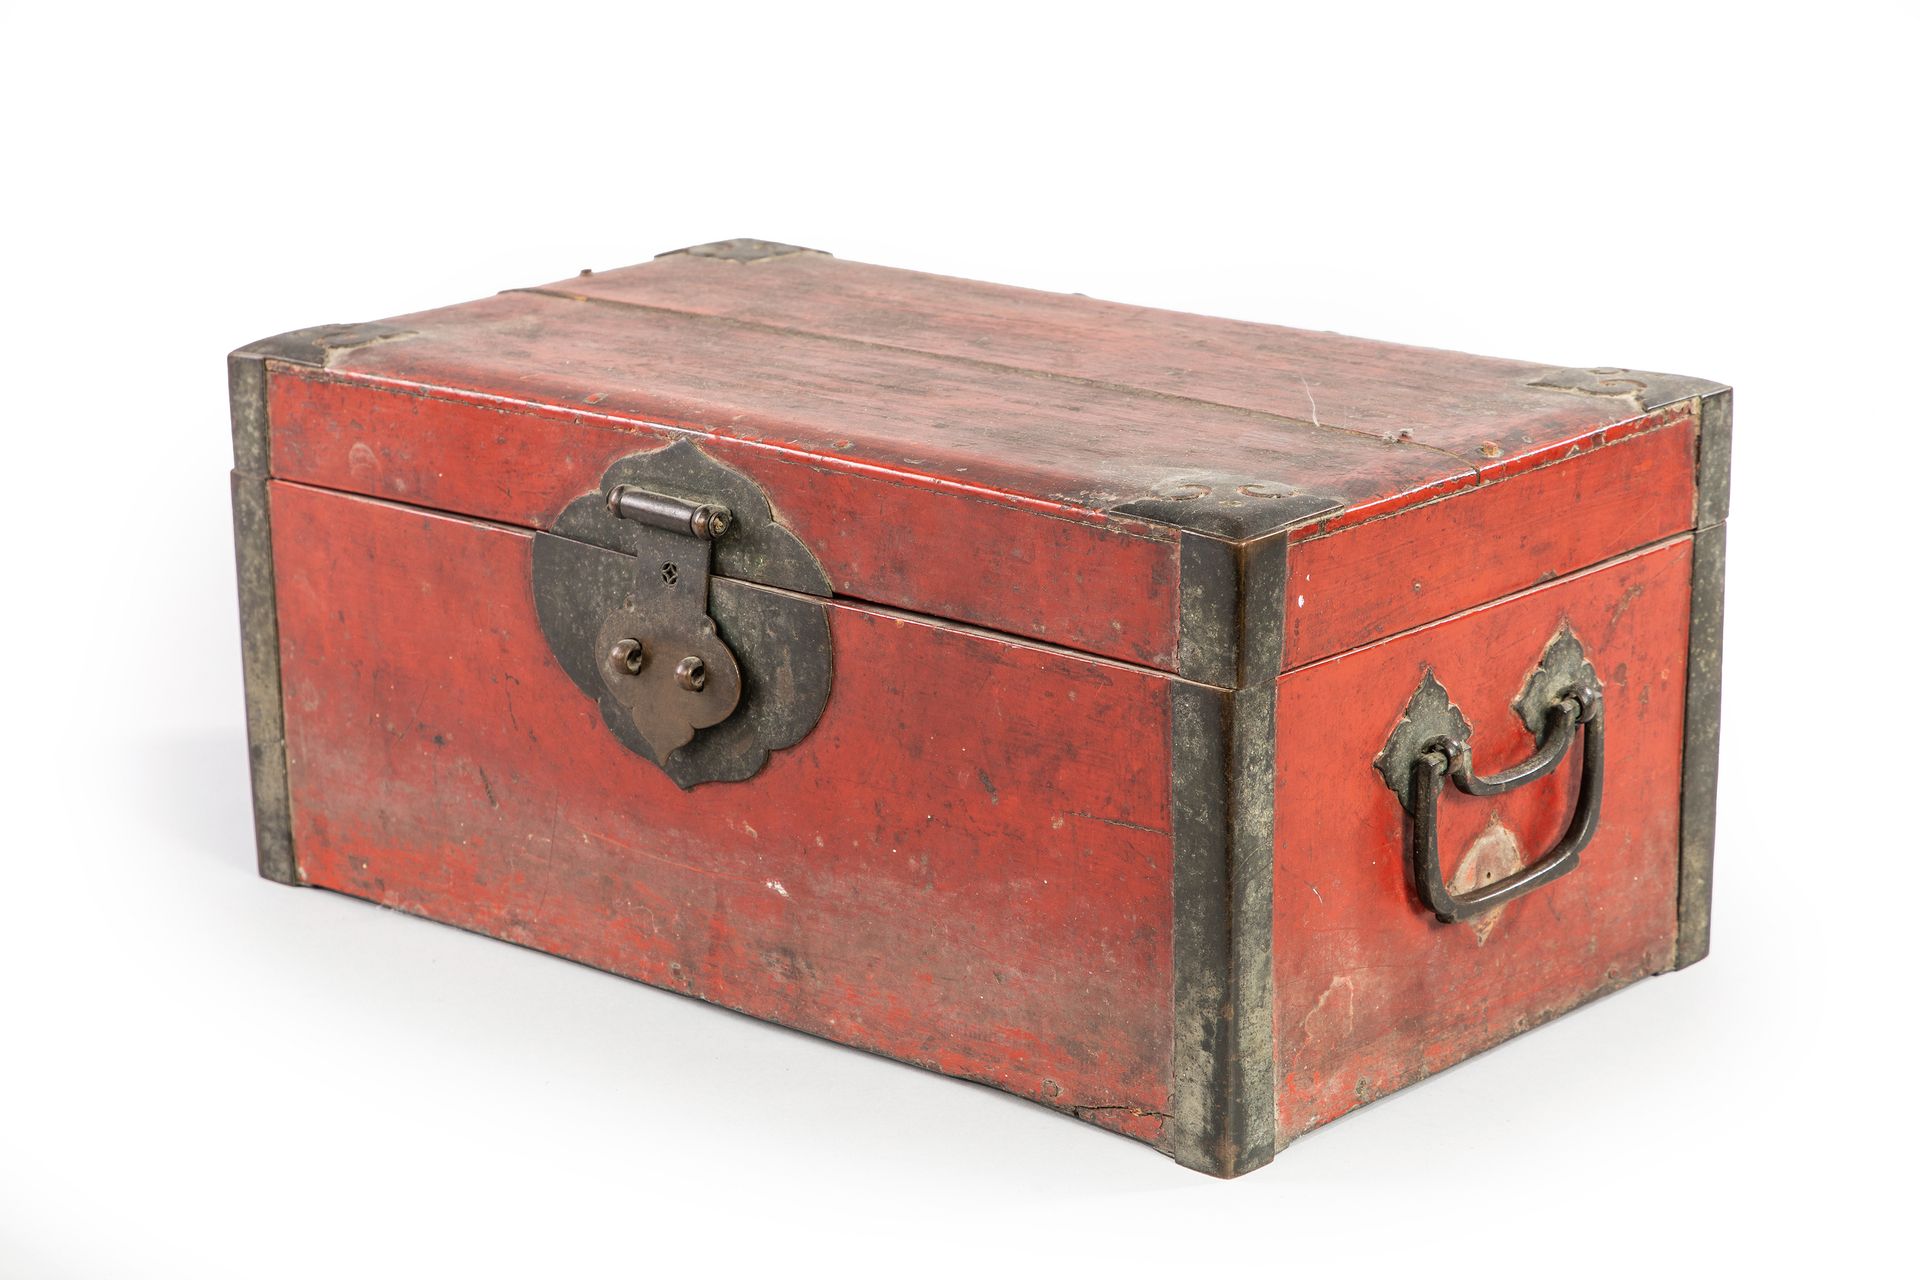 Null 
红色漆面木箱及其配件。

中国20世纪初

18 x 43 x 23 厘米